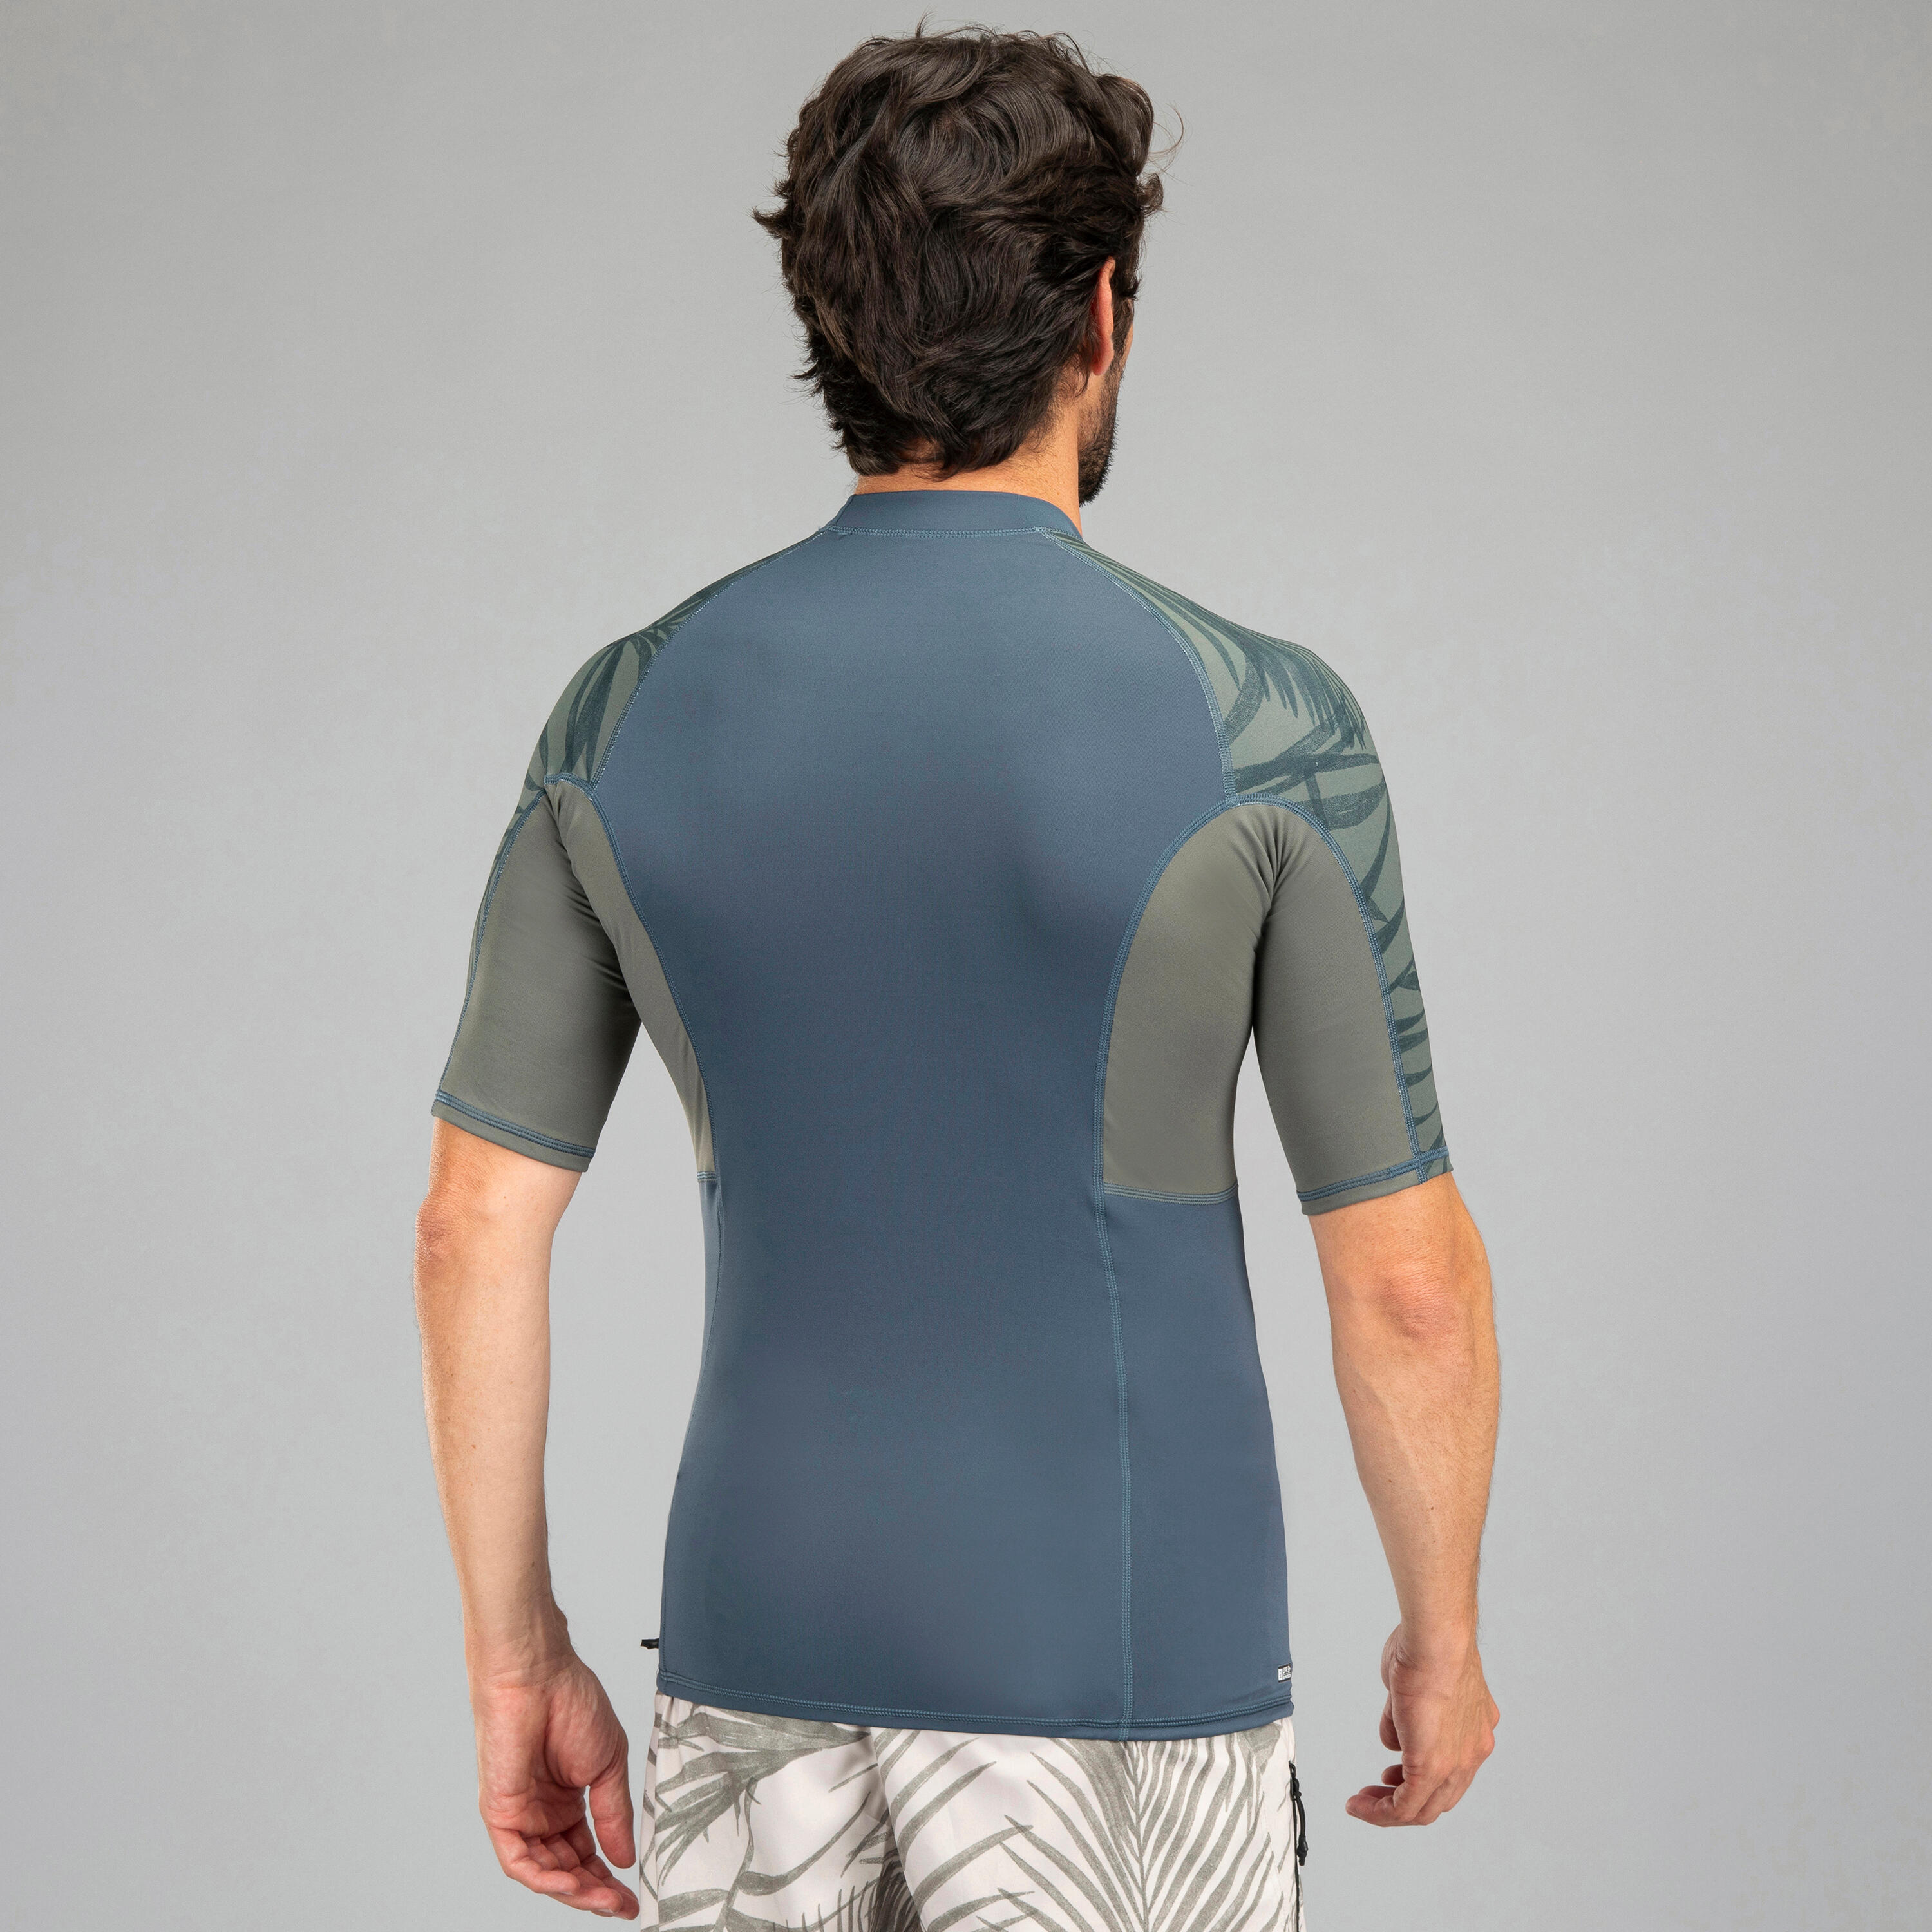 Men's surfing short-sleeved UV-protection T-shirt - 500 grey khaki 5/8